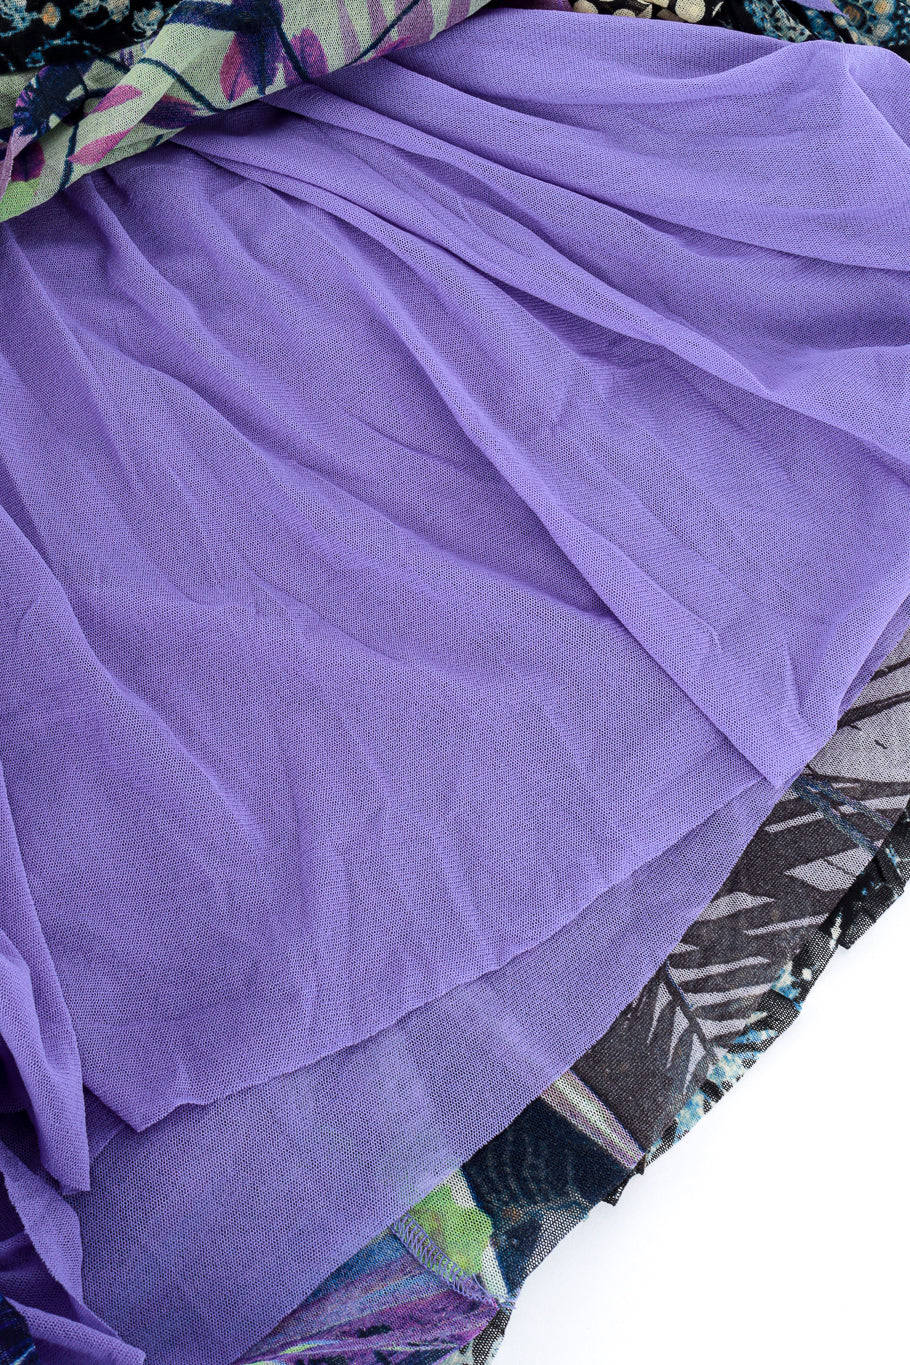 Gaultier 2009 P&P Maxi Dress lining detail @RECESS LA